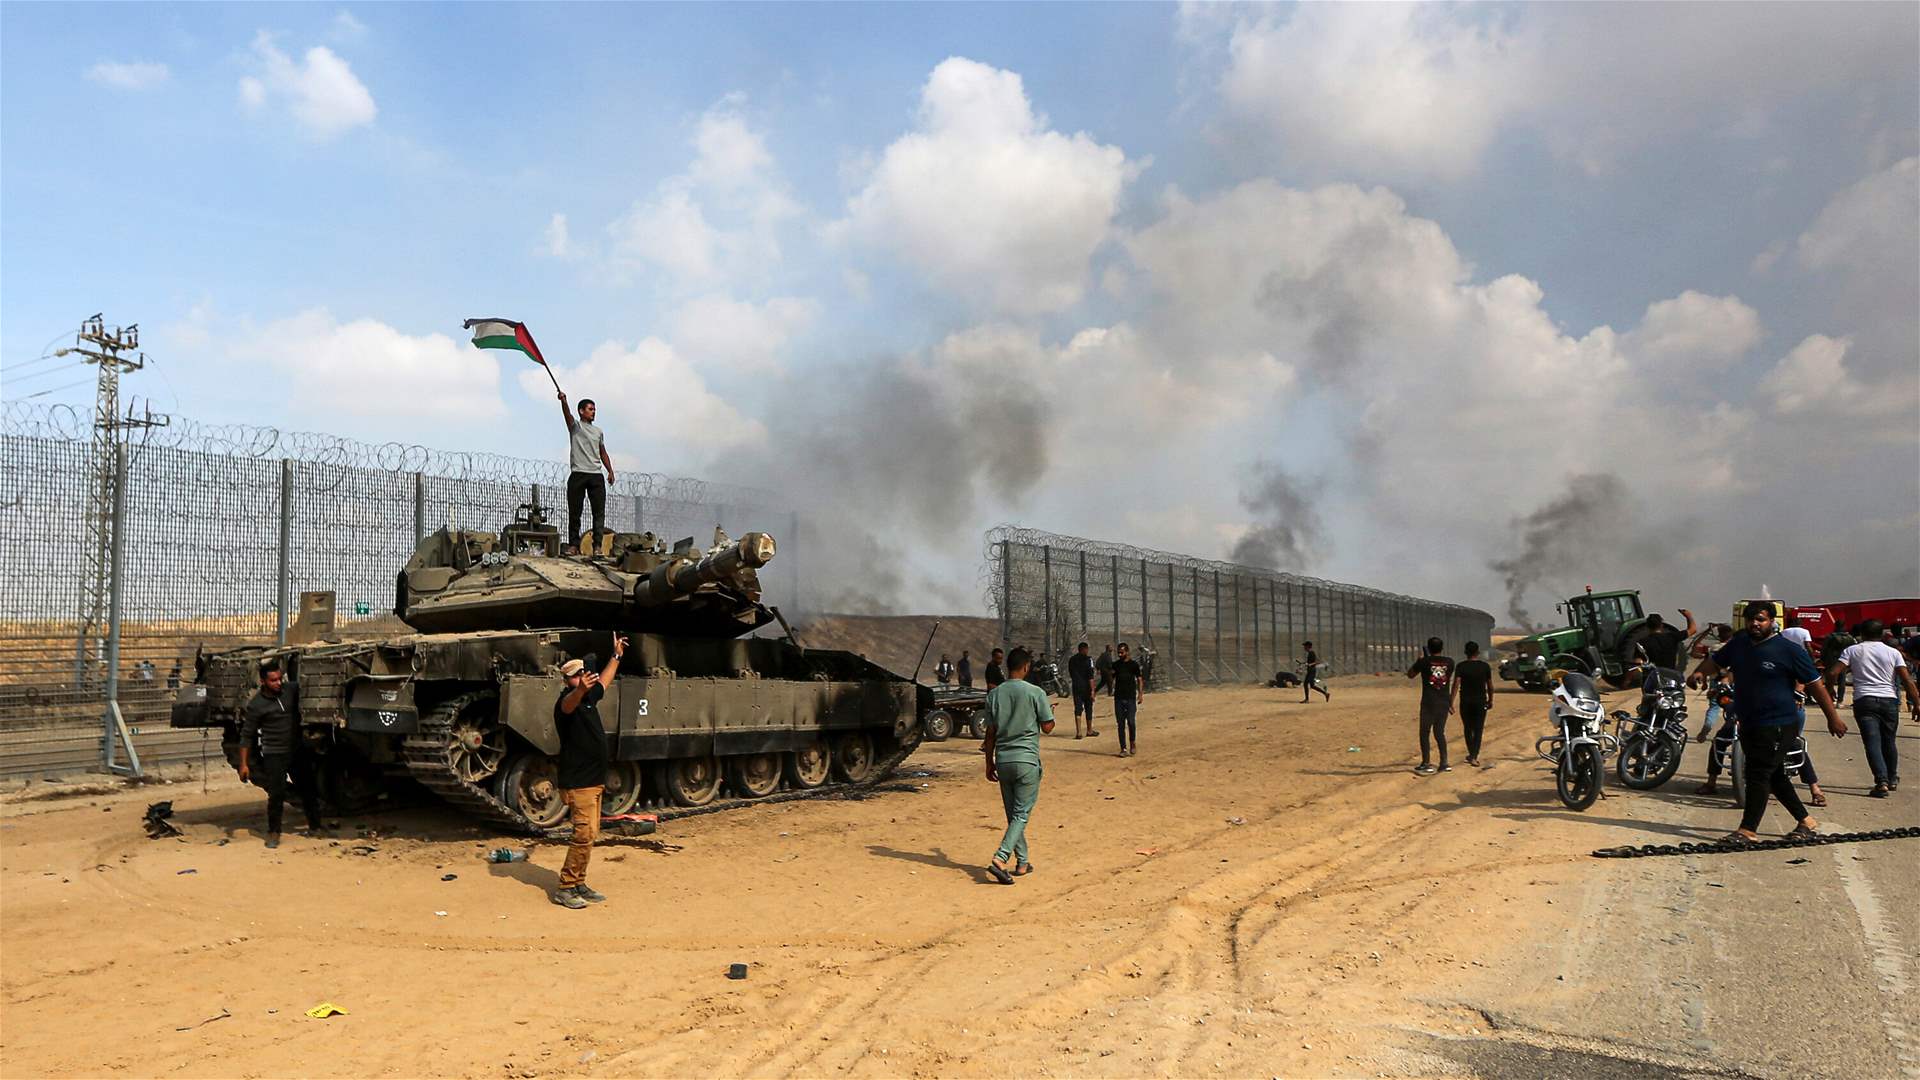 Hamas says it captured Israeli soldiers in Gaza; Israeli army denies